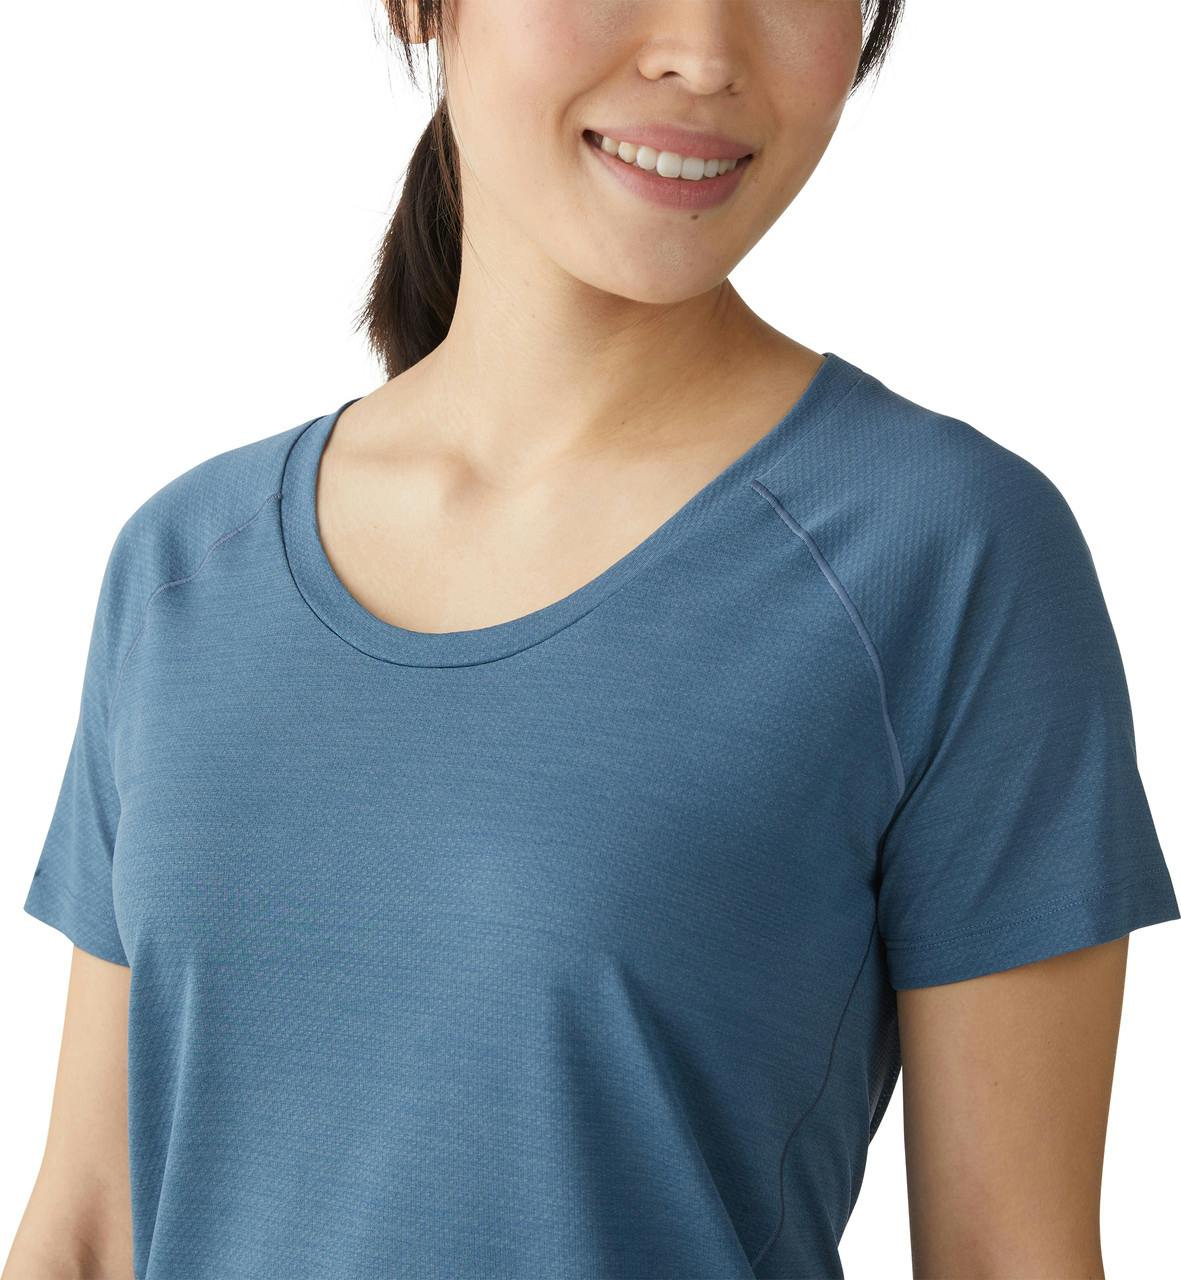 Core Train Short Sleeve T-Shirt Vintage Blue Heather